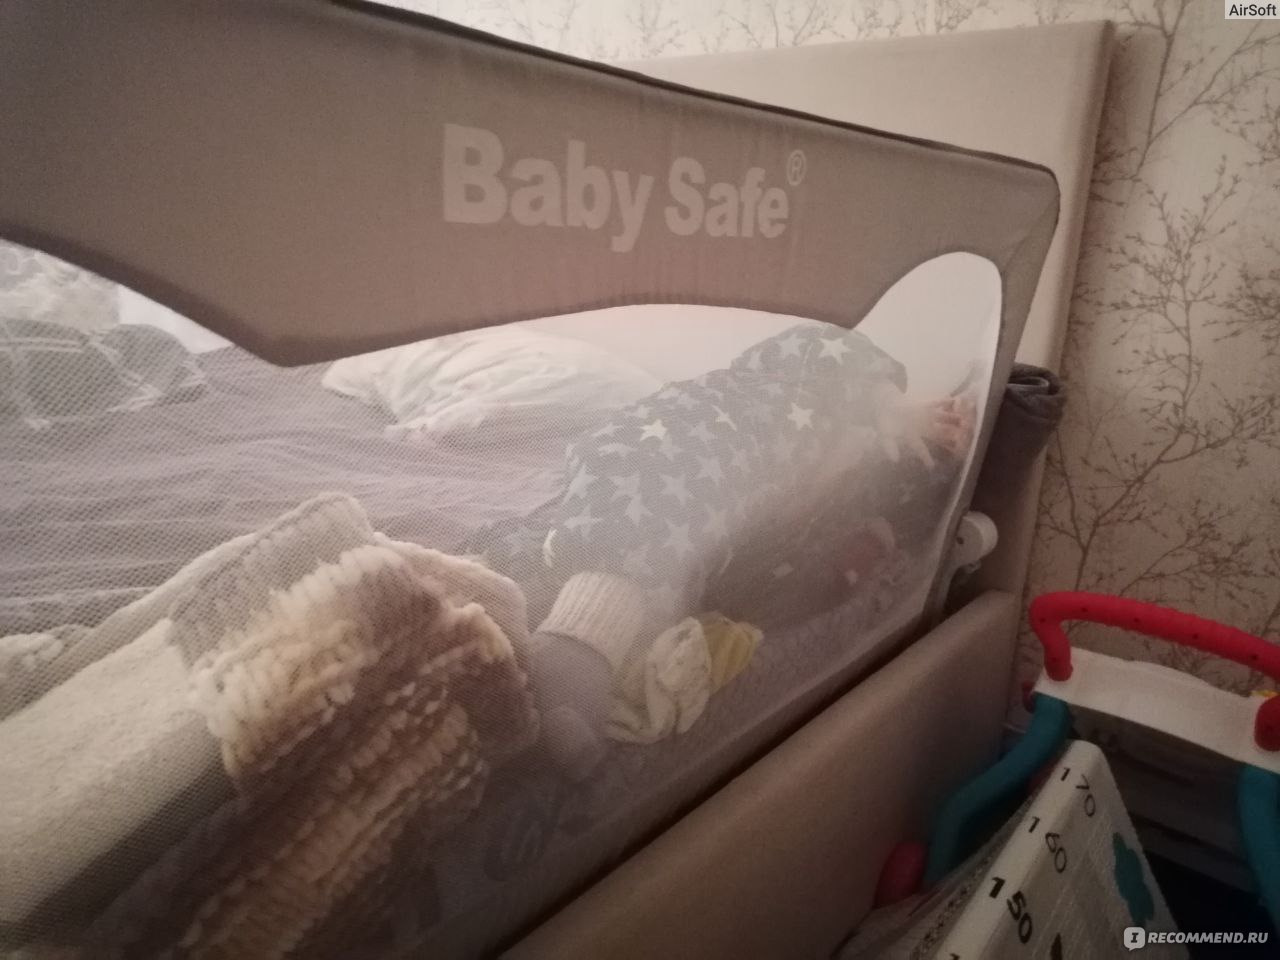 Ребенок 4 месяца упал с кровати последствия